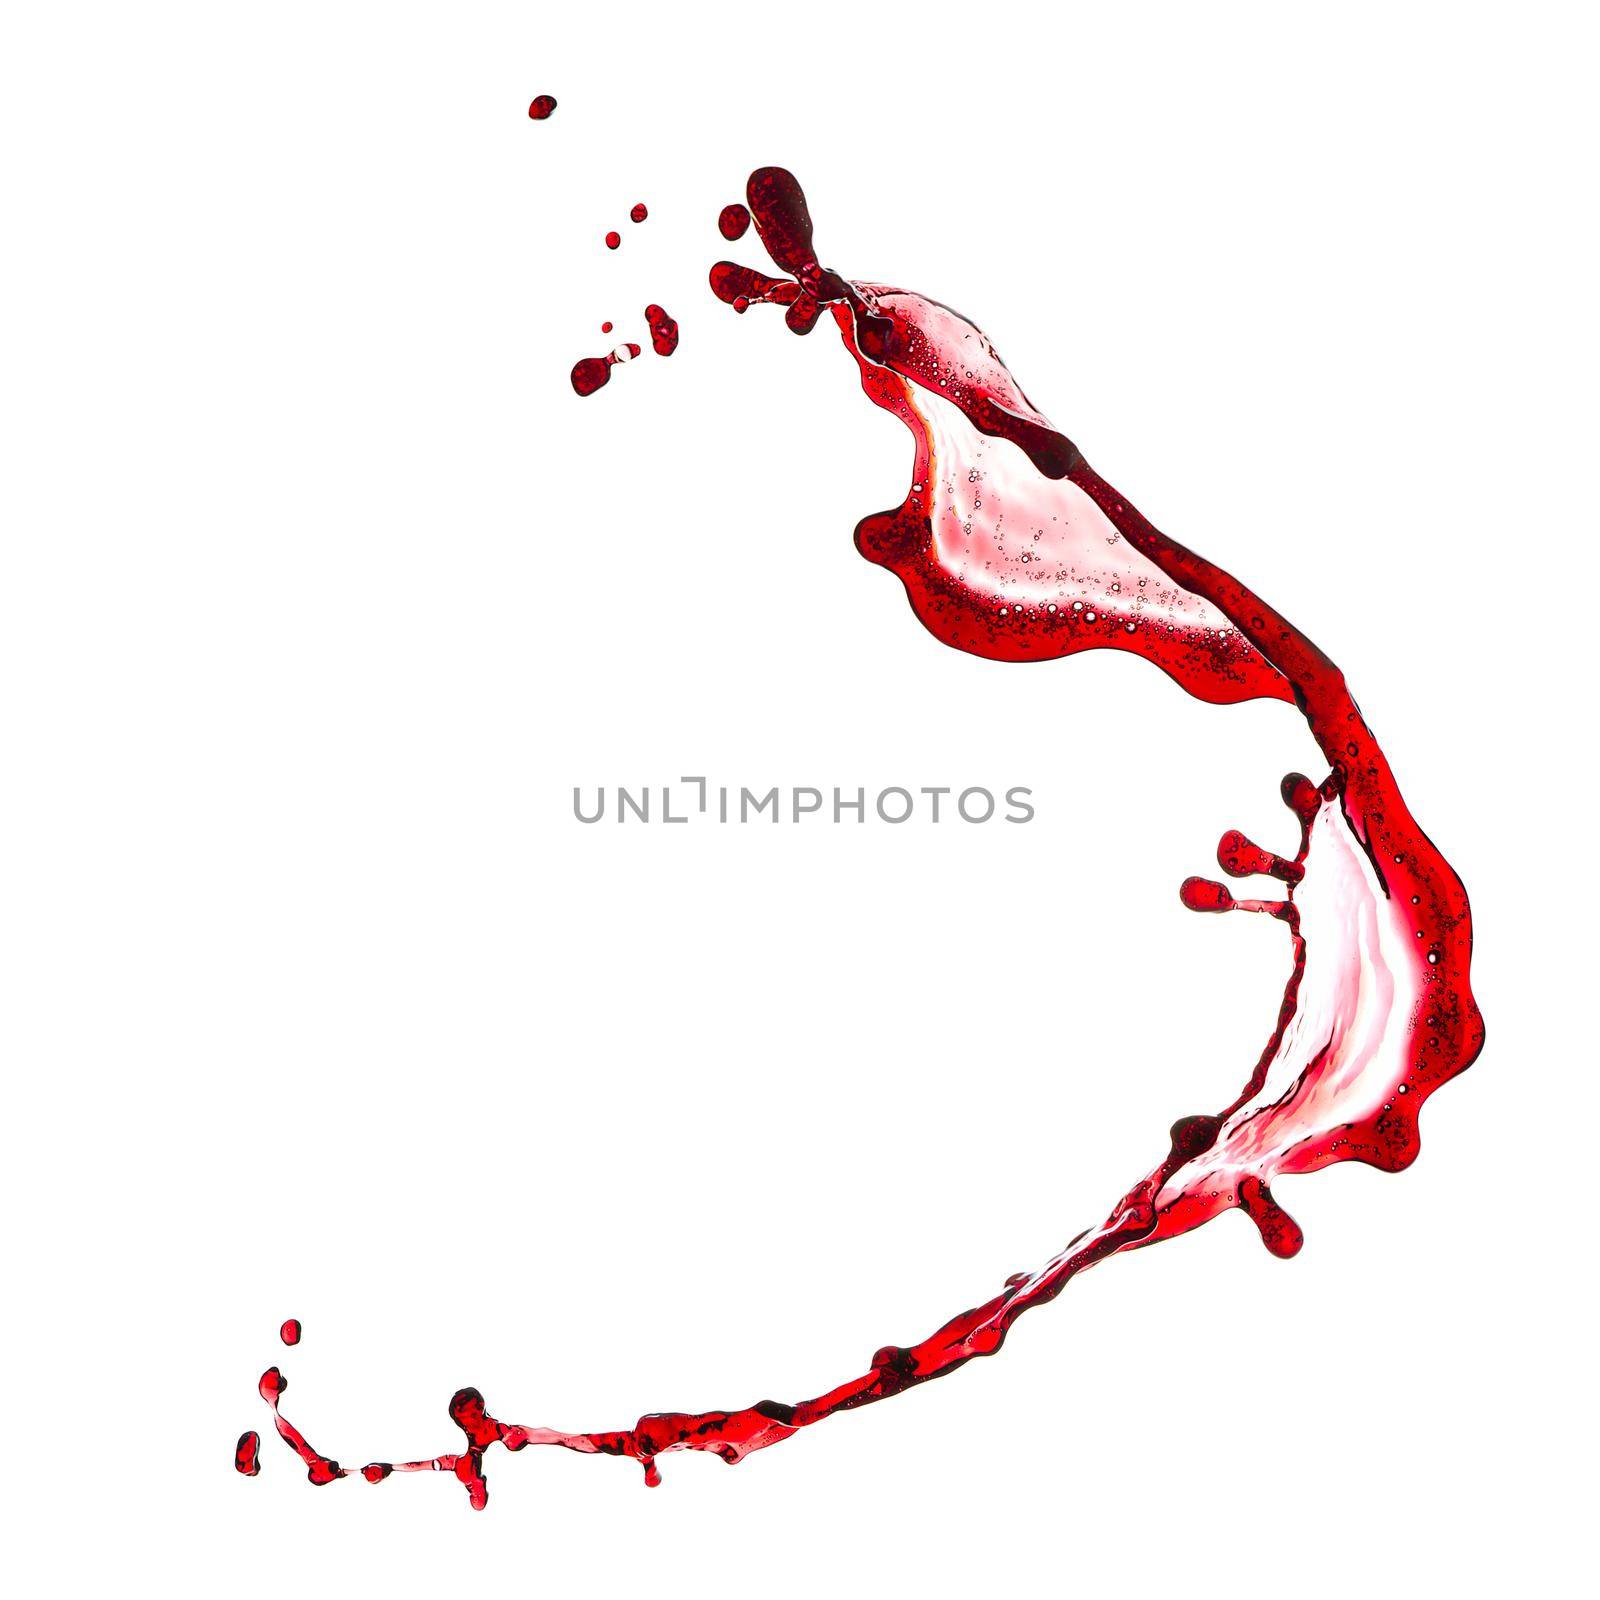 Isolated Red wine splash on white background by PhotoTime